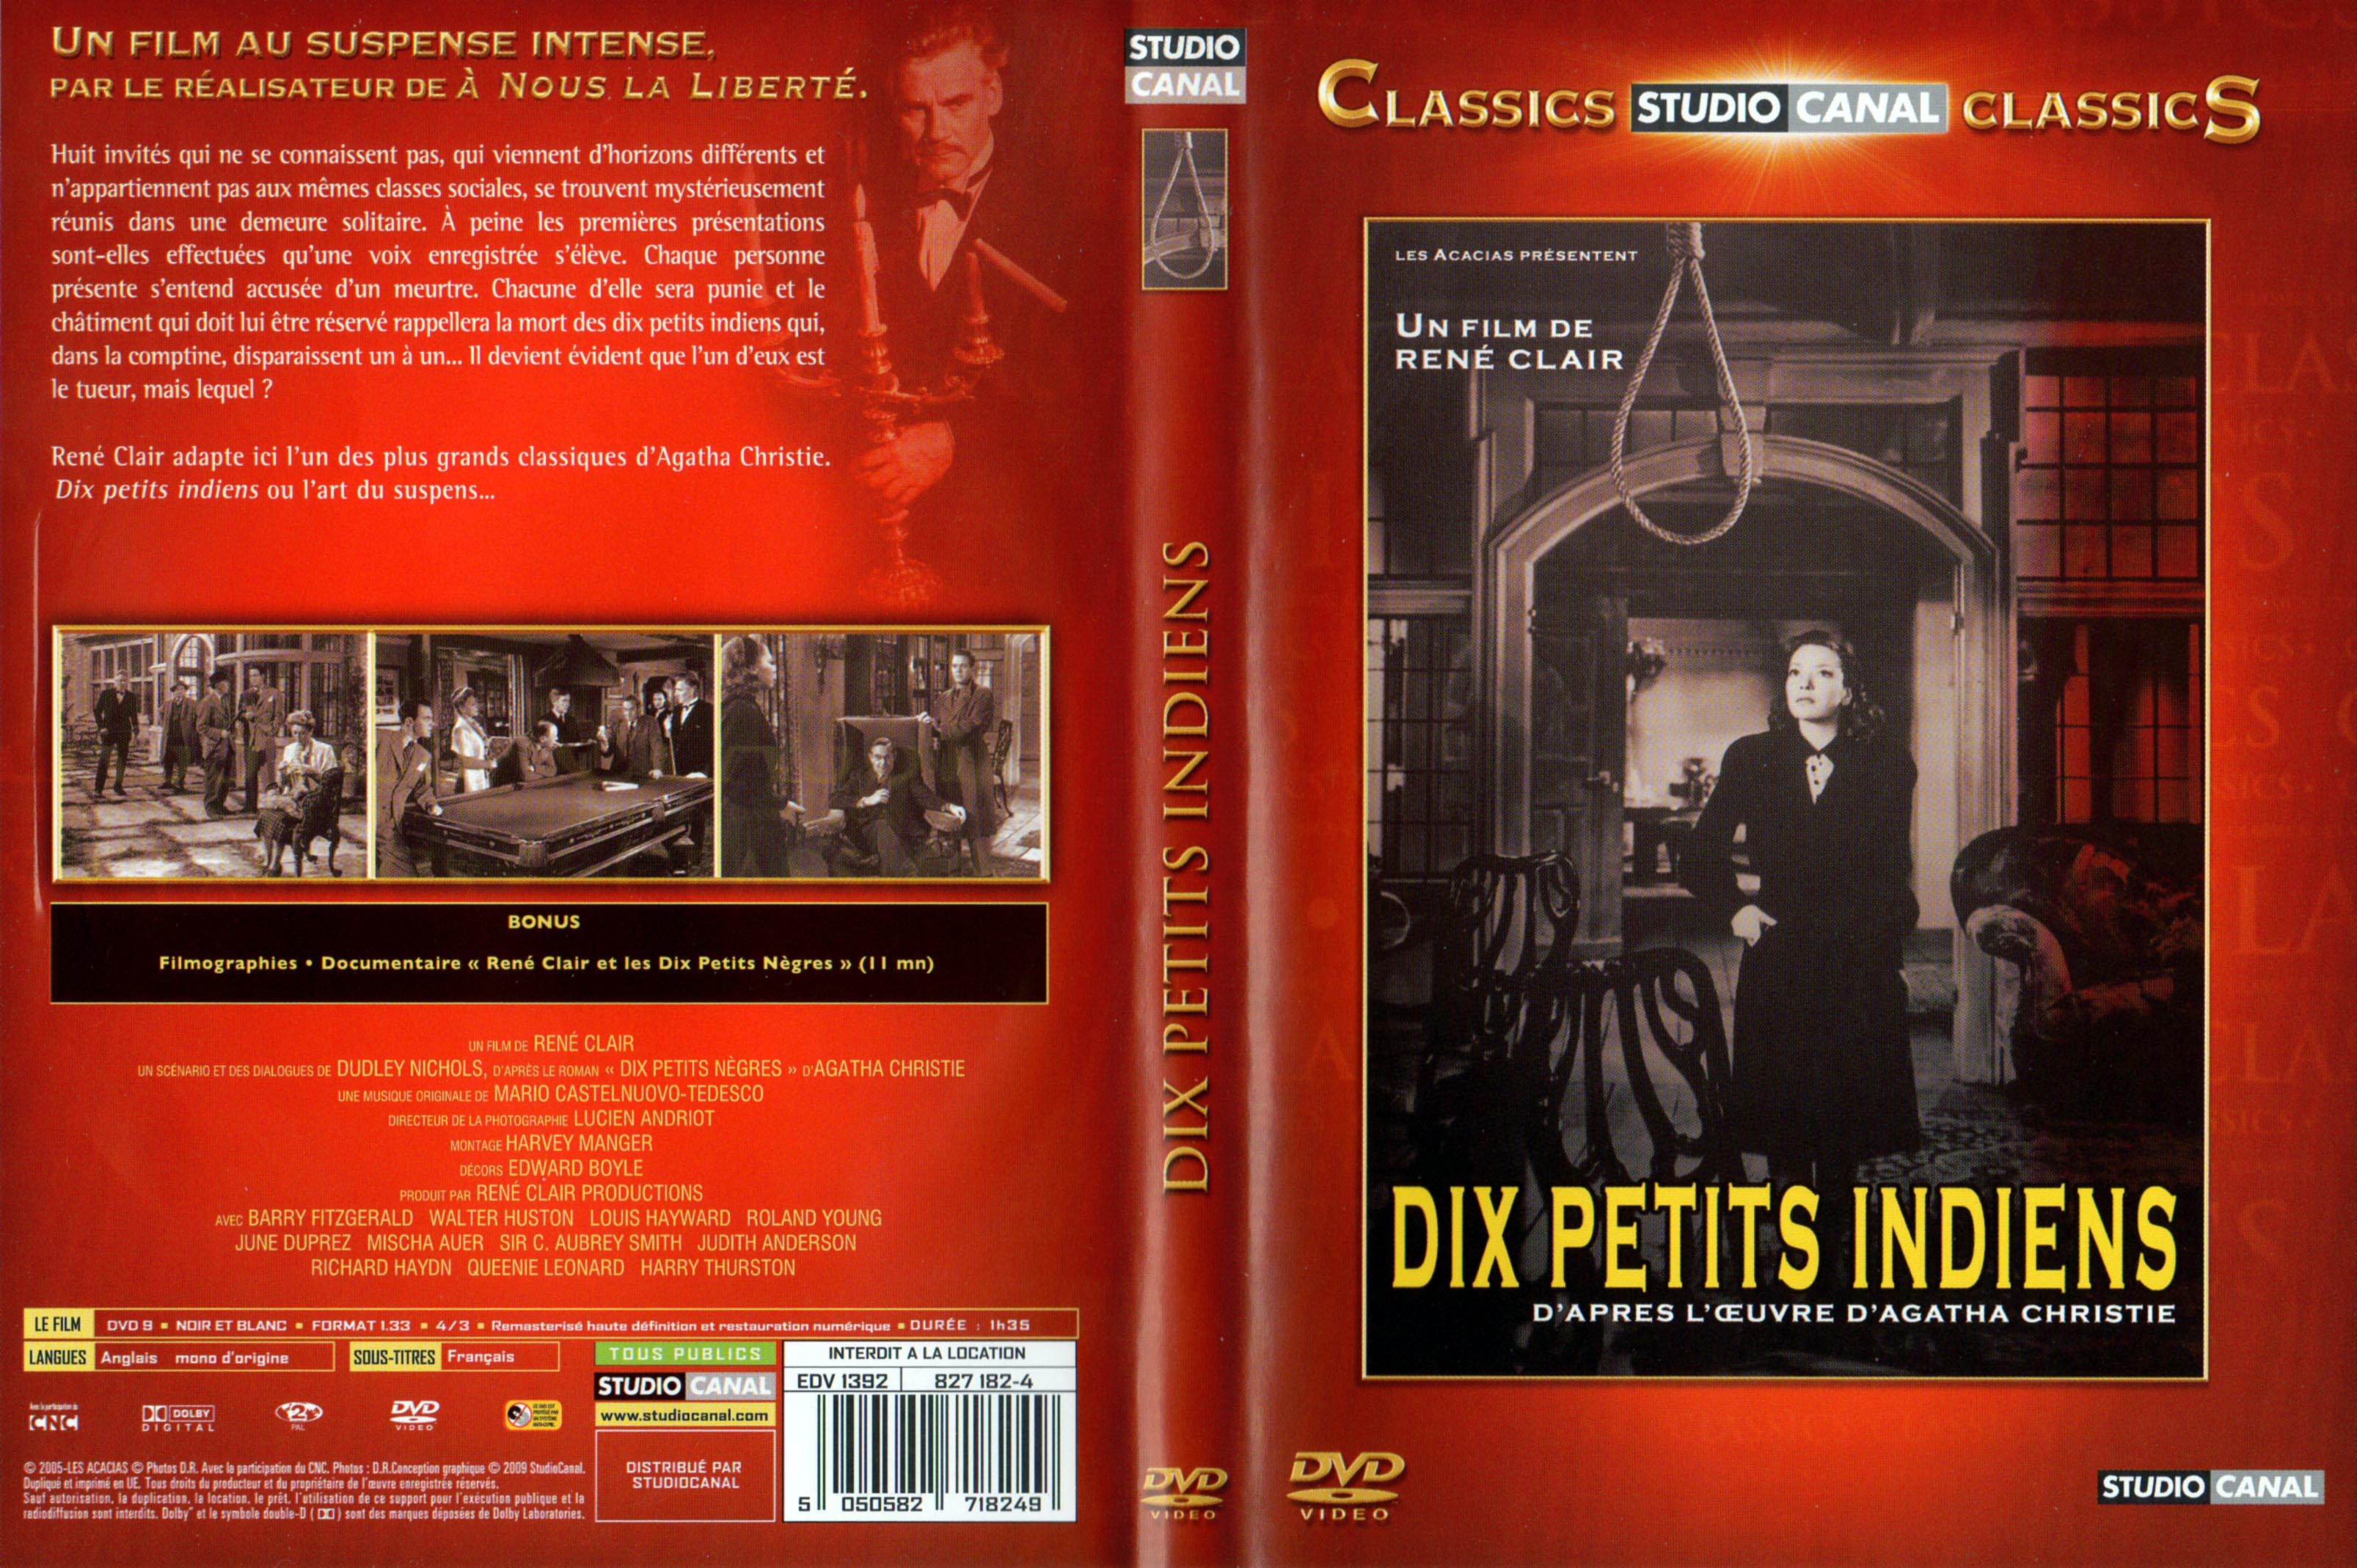 Jaquette DVD Dix petits indiens